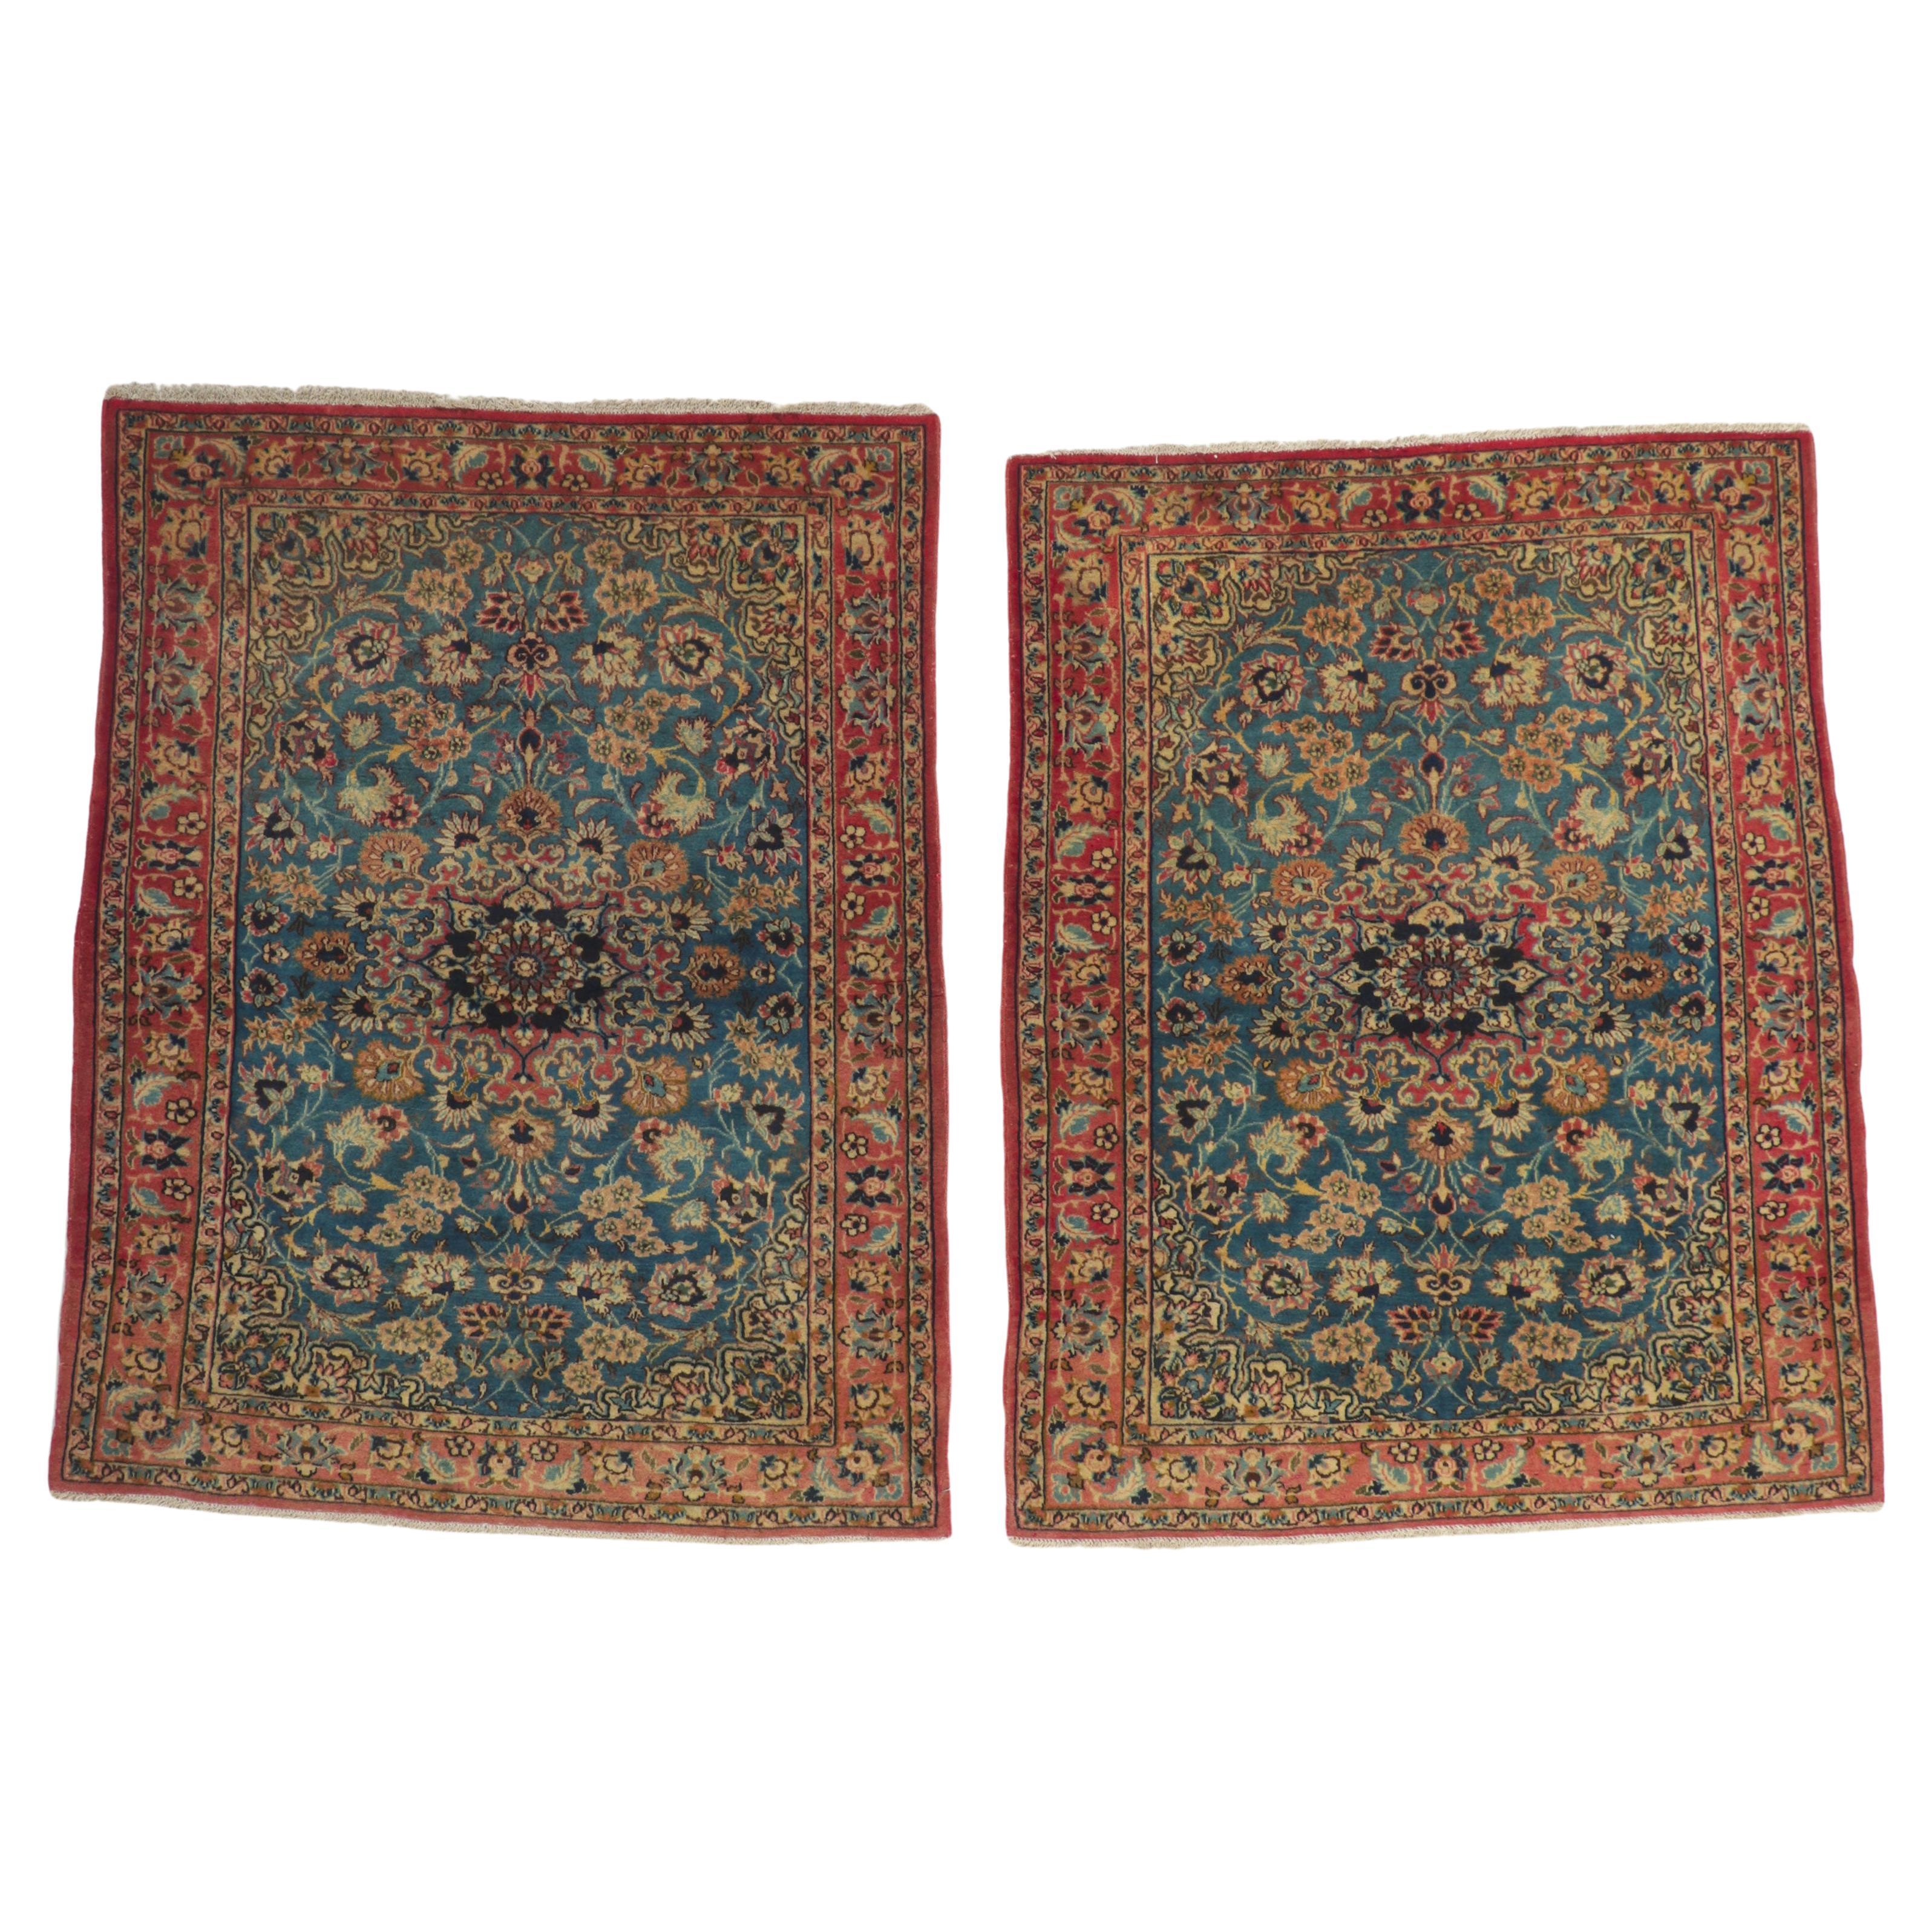 Pair of Matching Vintage Persian Isfahan Rugs